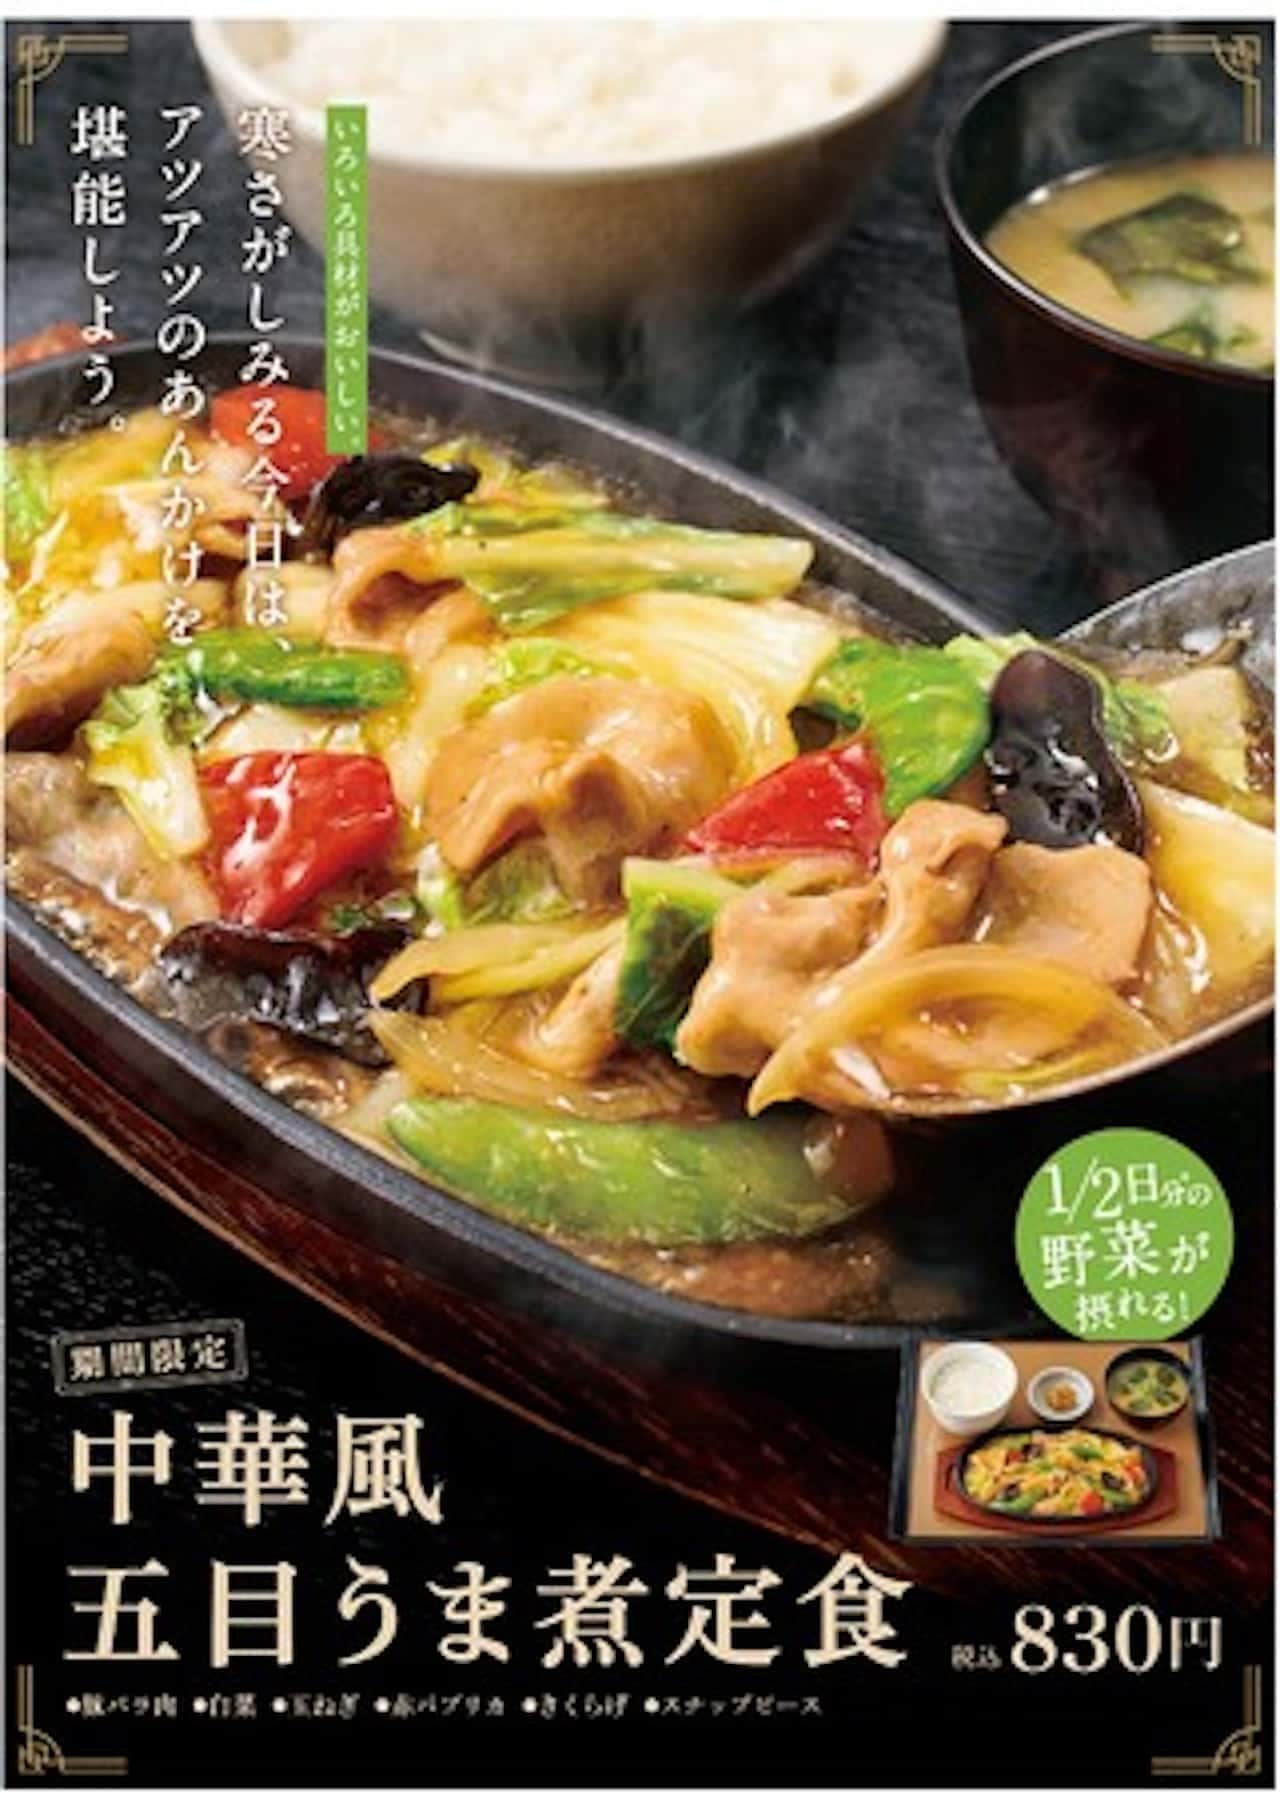 Yayoiken "Chinese style five-eyed horse boiled set meal"